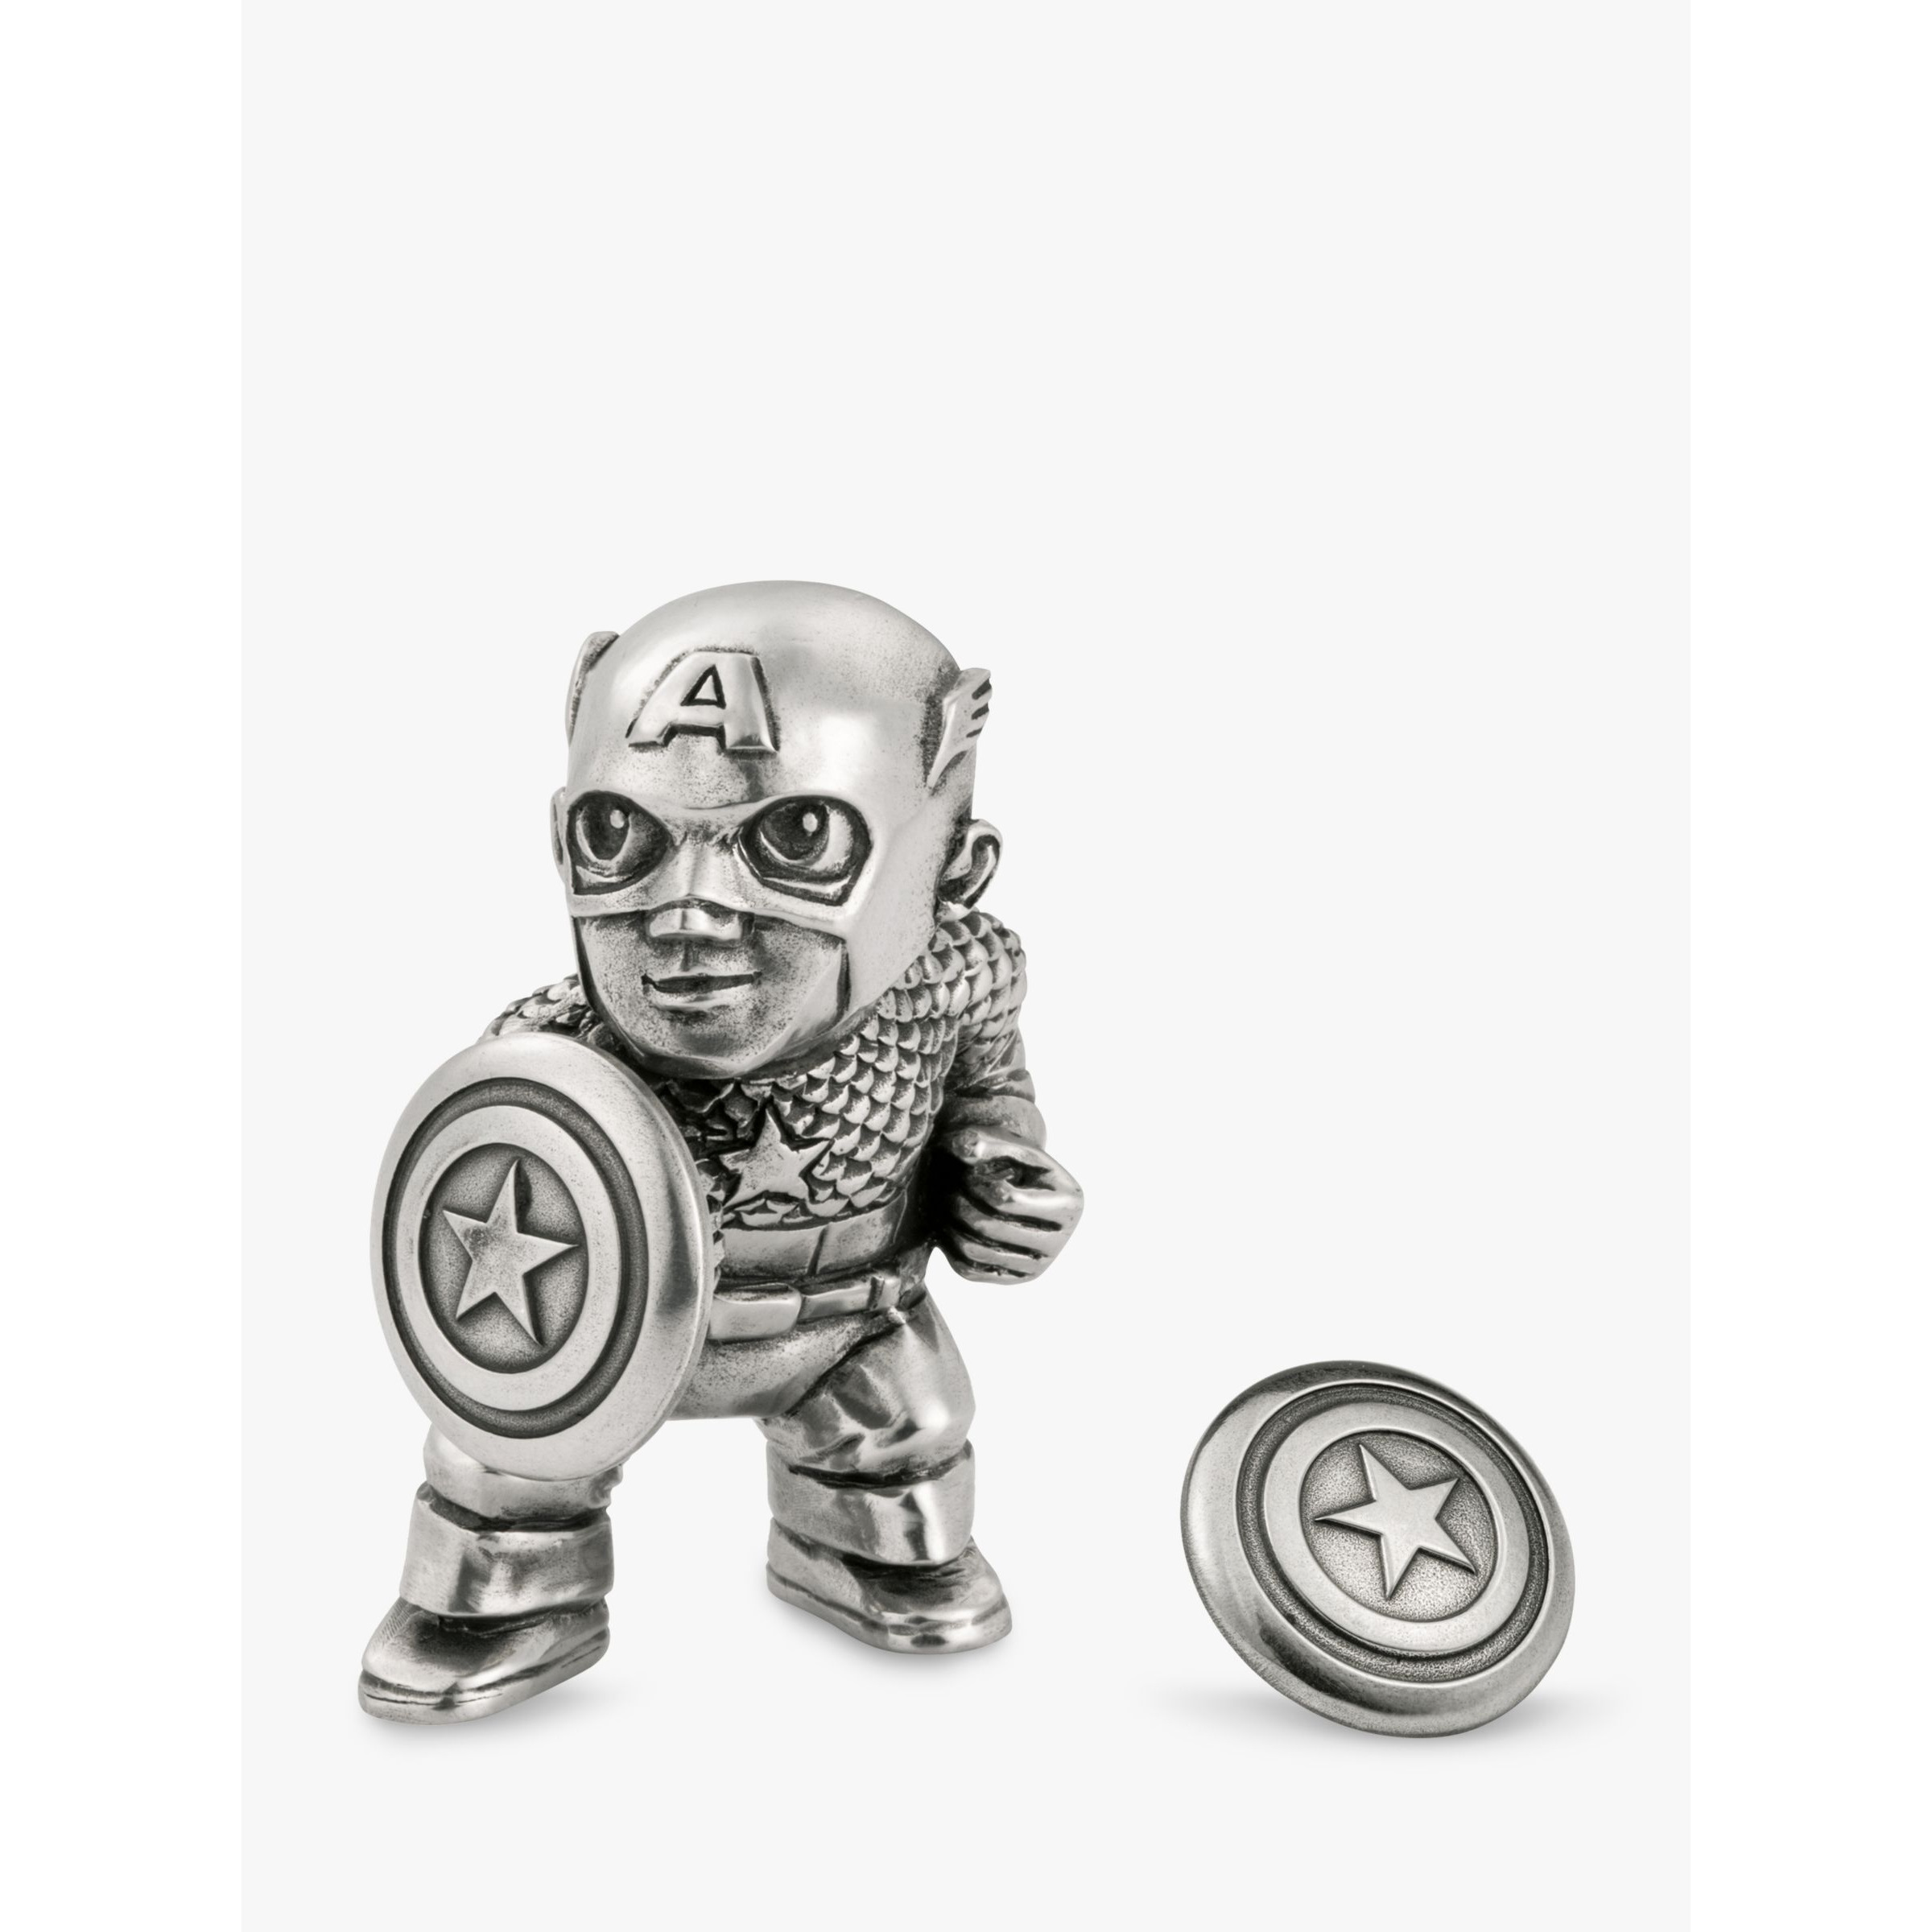 Royal Selangor Mini Captain America Figurine and Lapel Pin Set - image 1